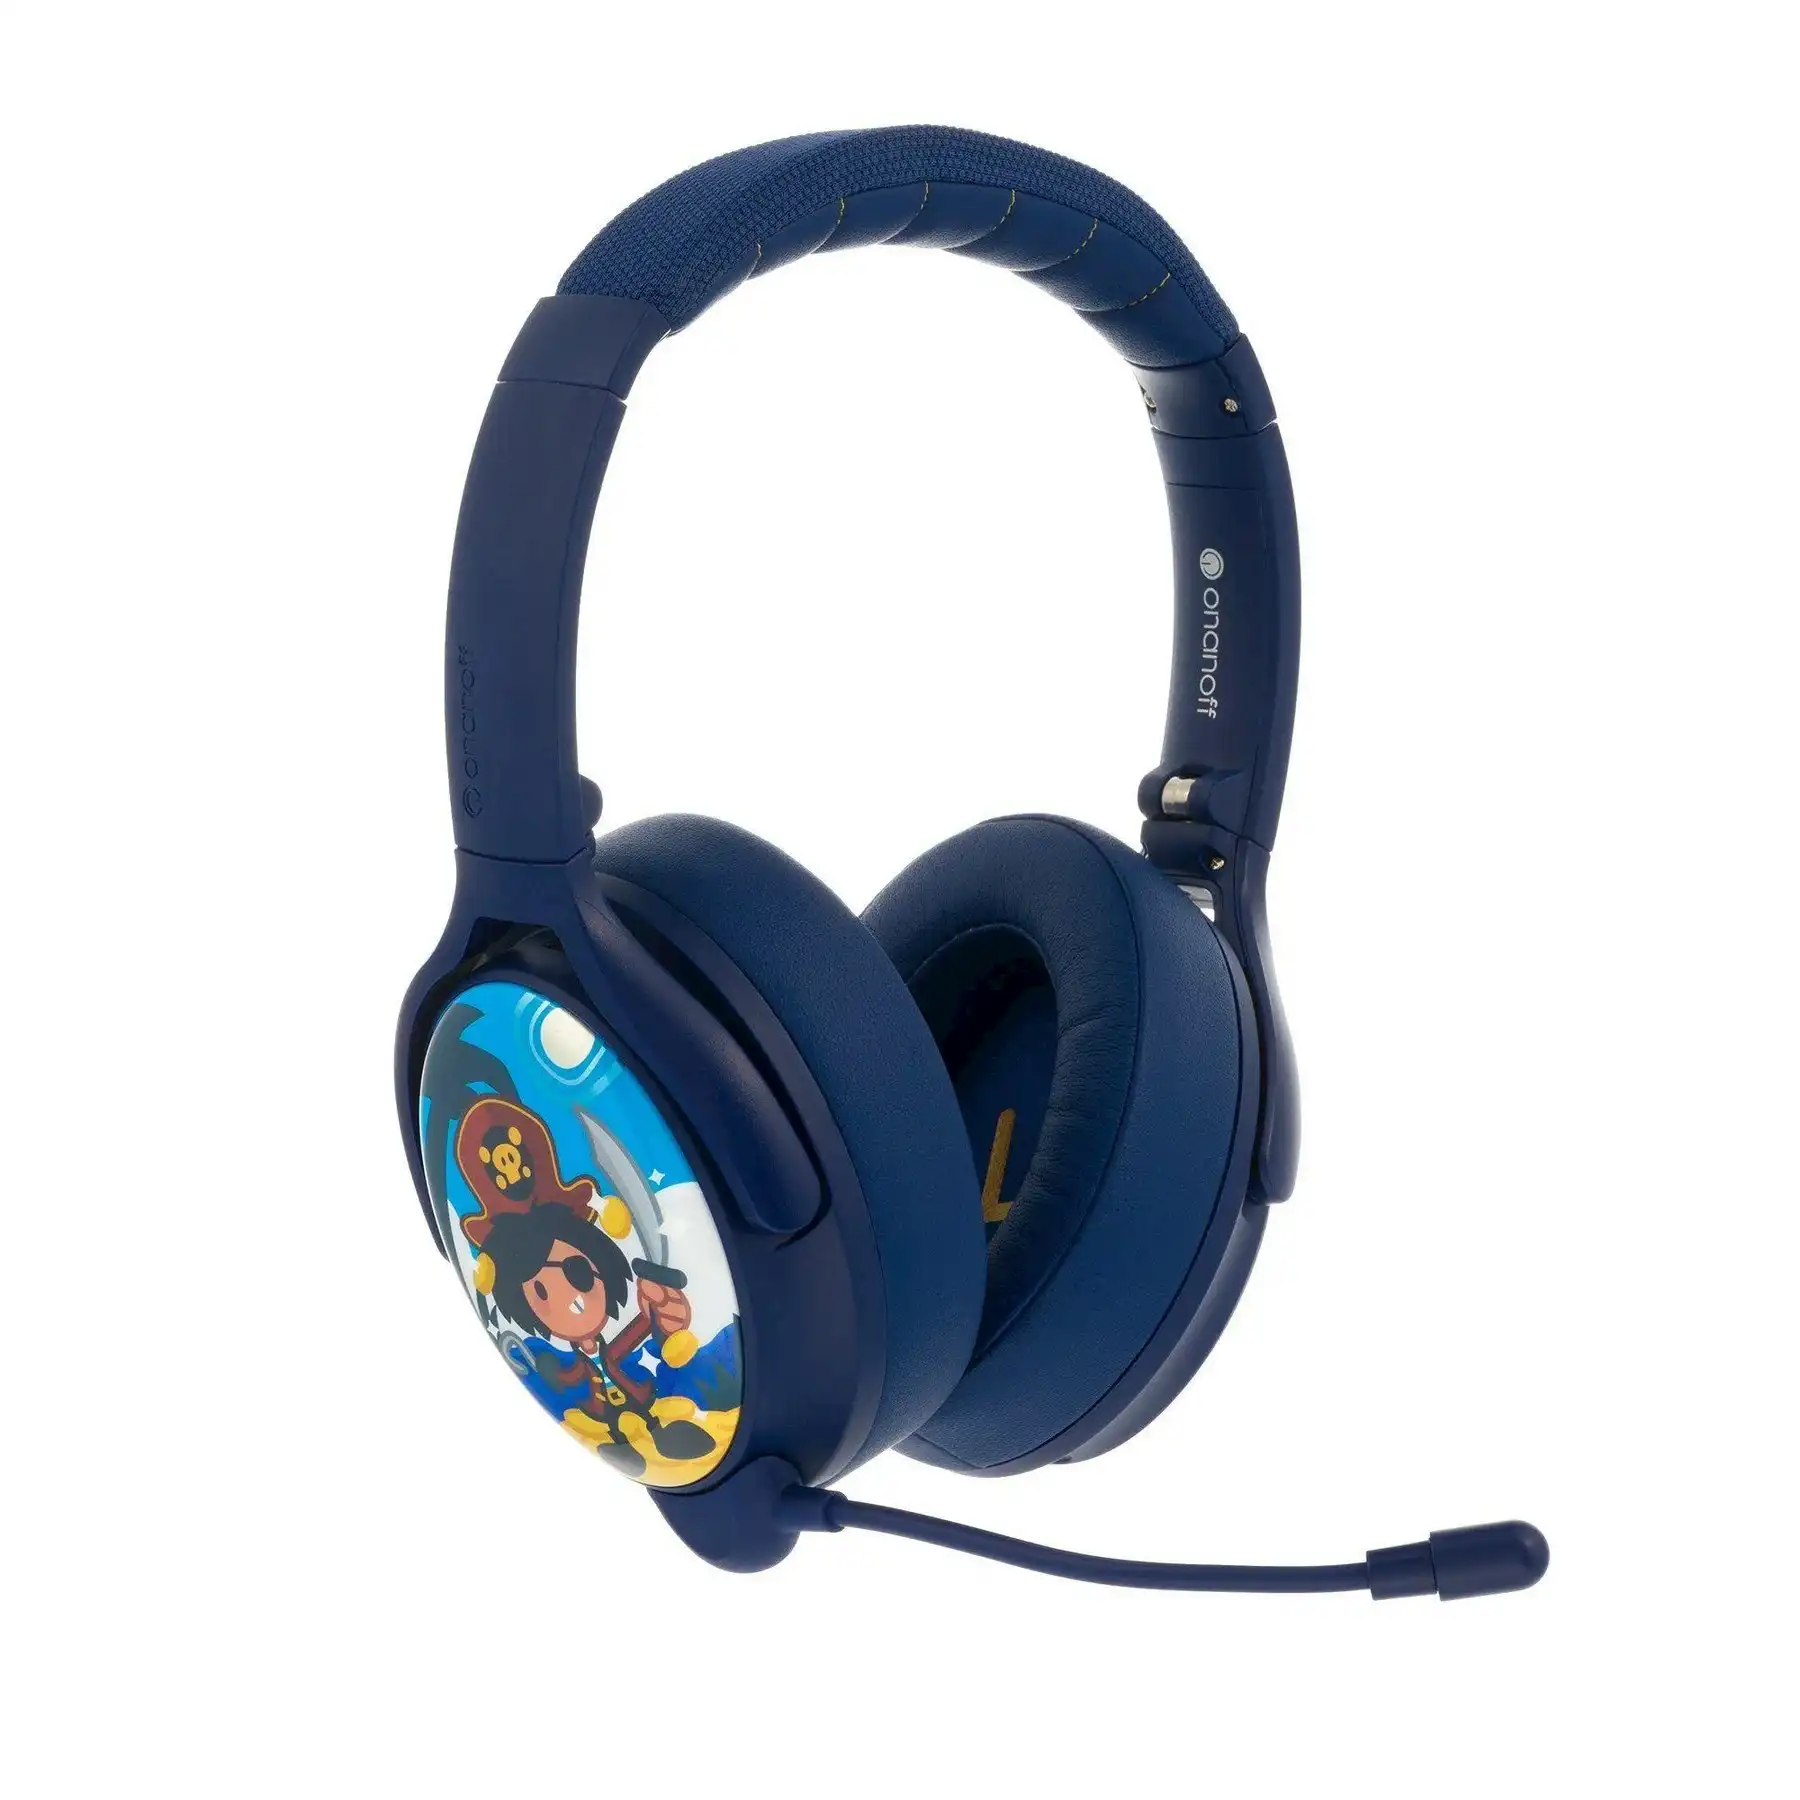 Buddyphones Cosmos Plus Anc Wireless Headphone - Deep Blue